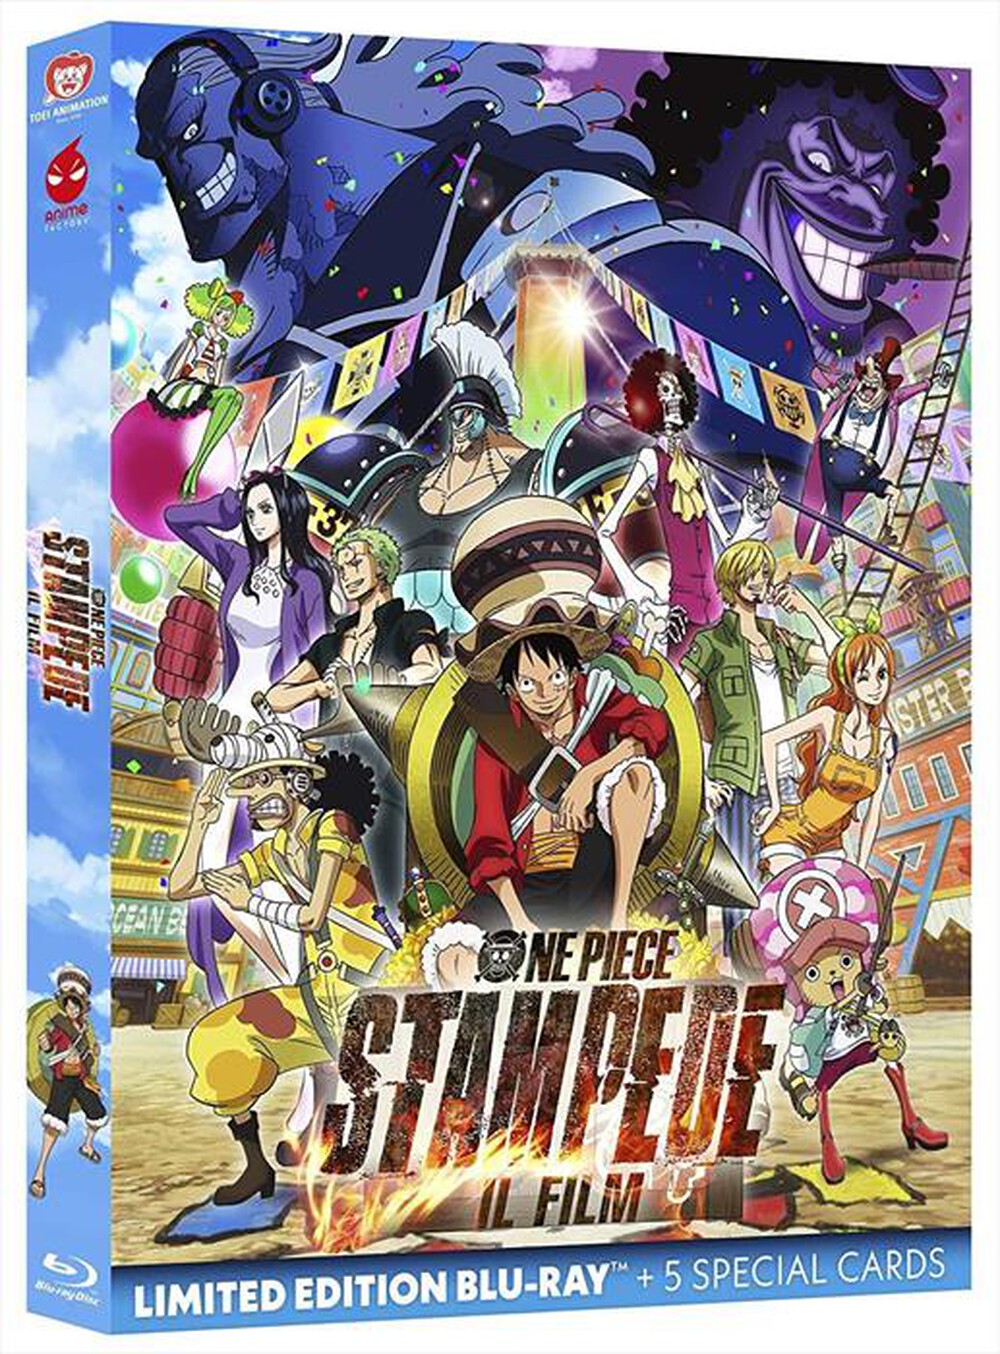 "KOCH MEDIA - One Piece Stampede - Il Film"